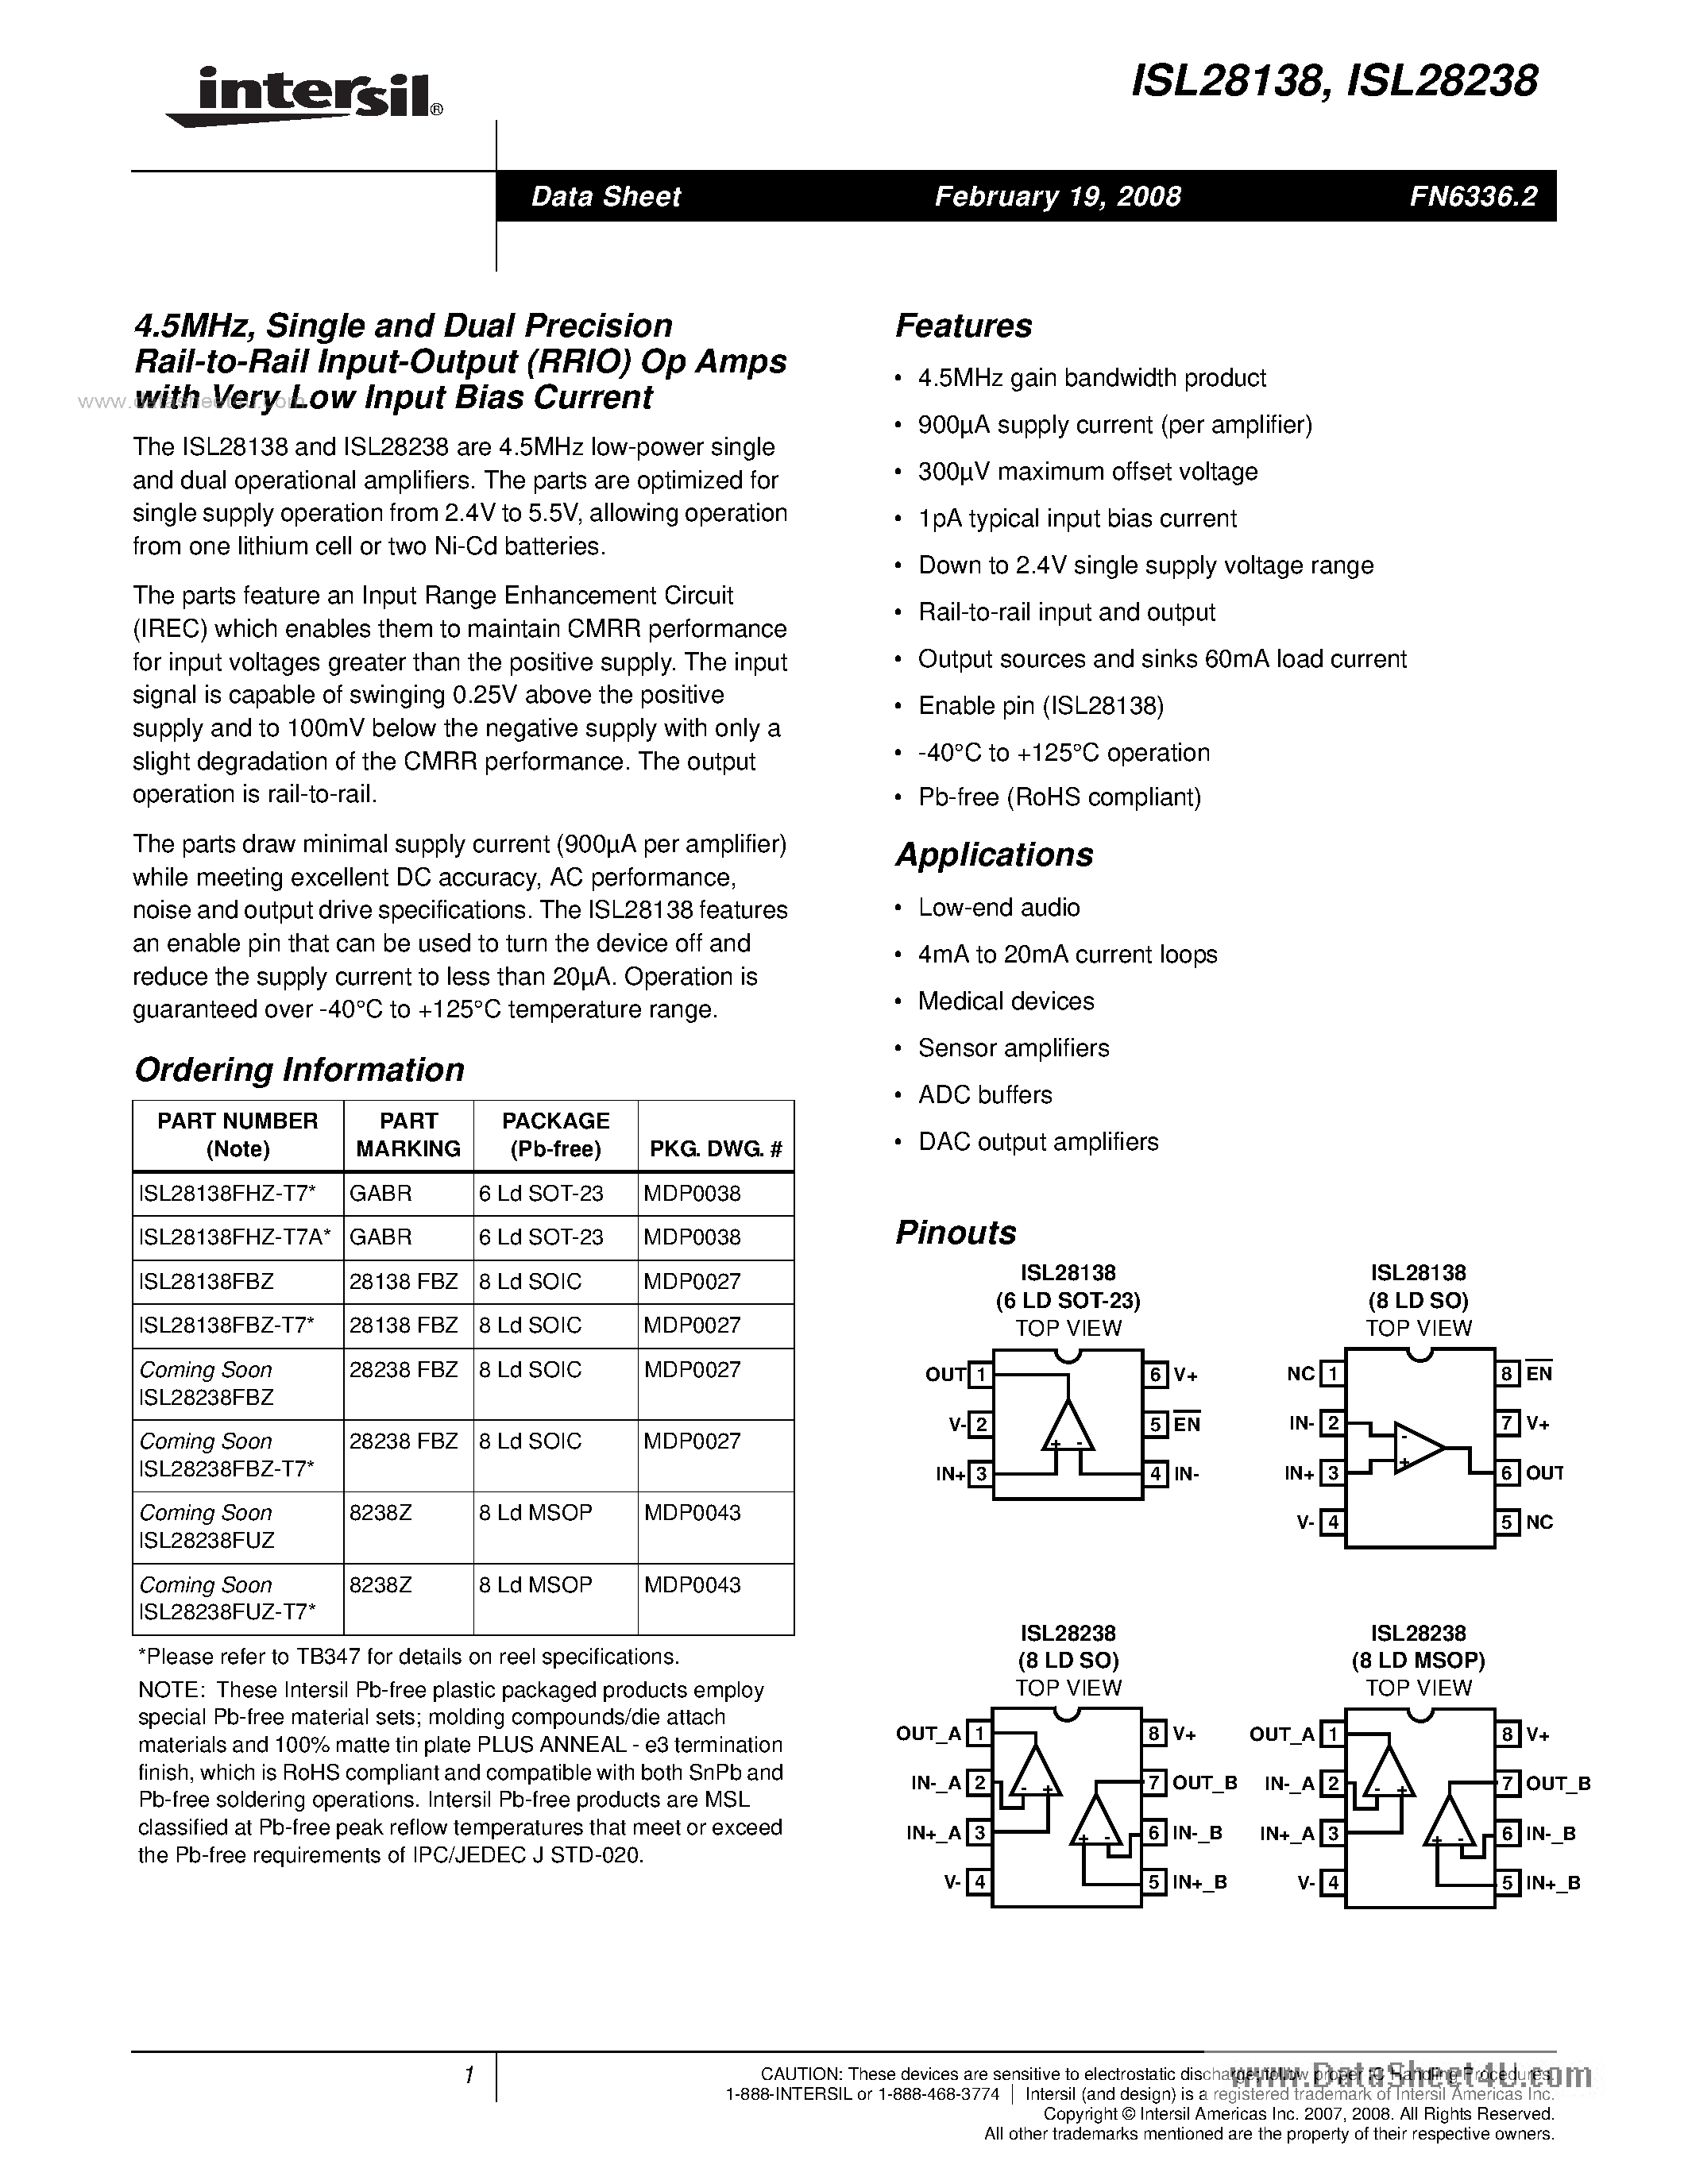 Даташит ISL28238 - (ISL28138 / ISL28238) Single and Dual Precision Rail-to-Rail Input-Output (RRIO) Op Amps страница 1